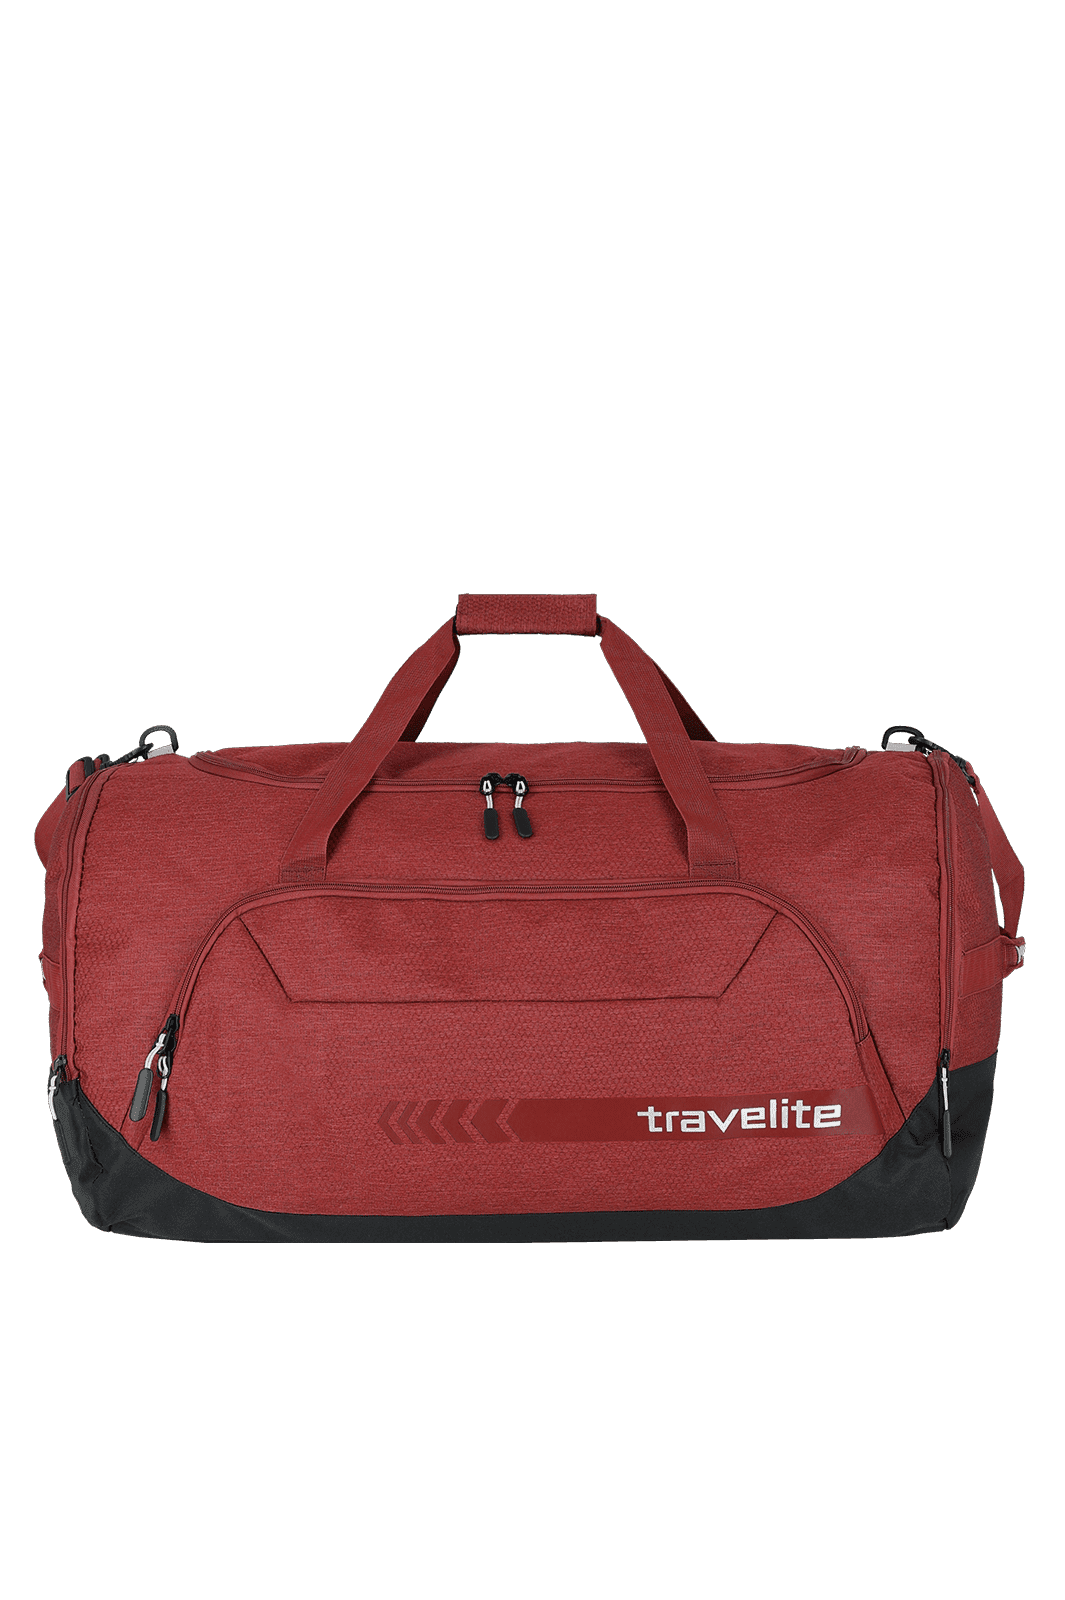 Travel bag XL